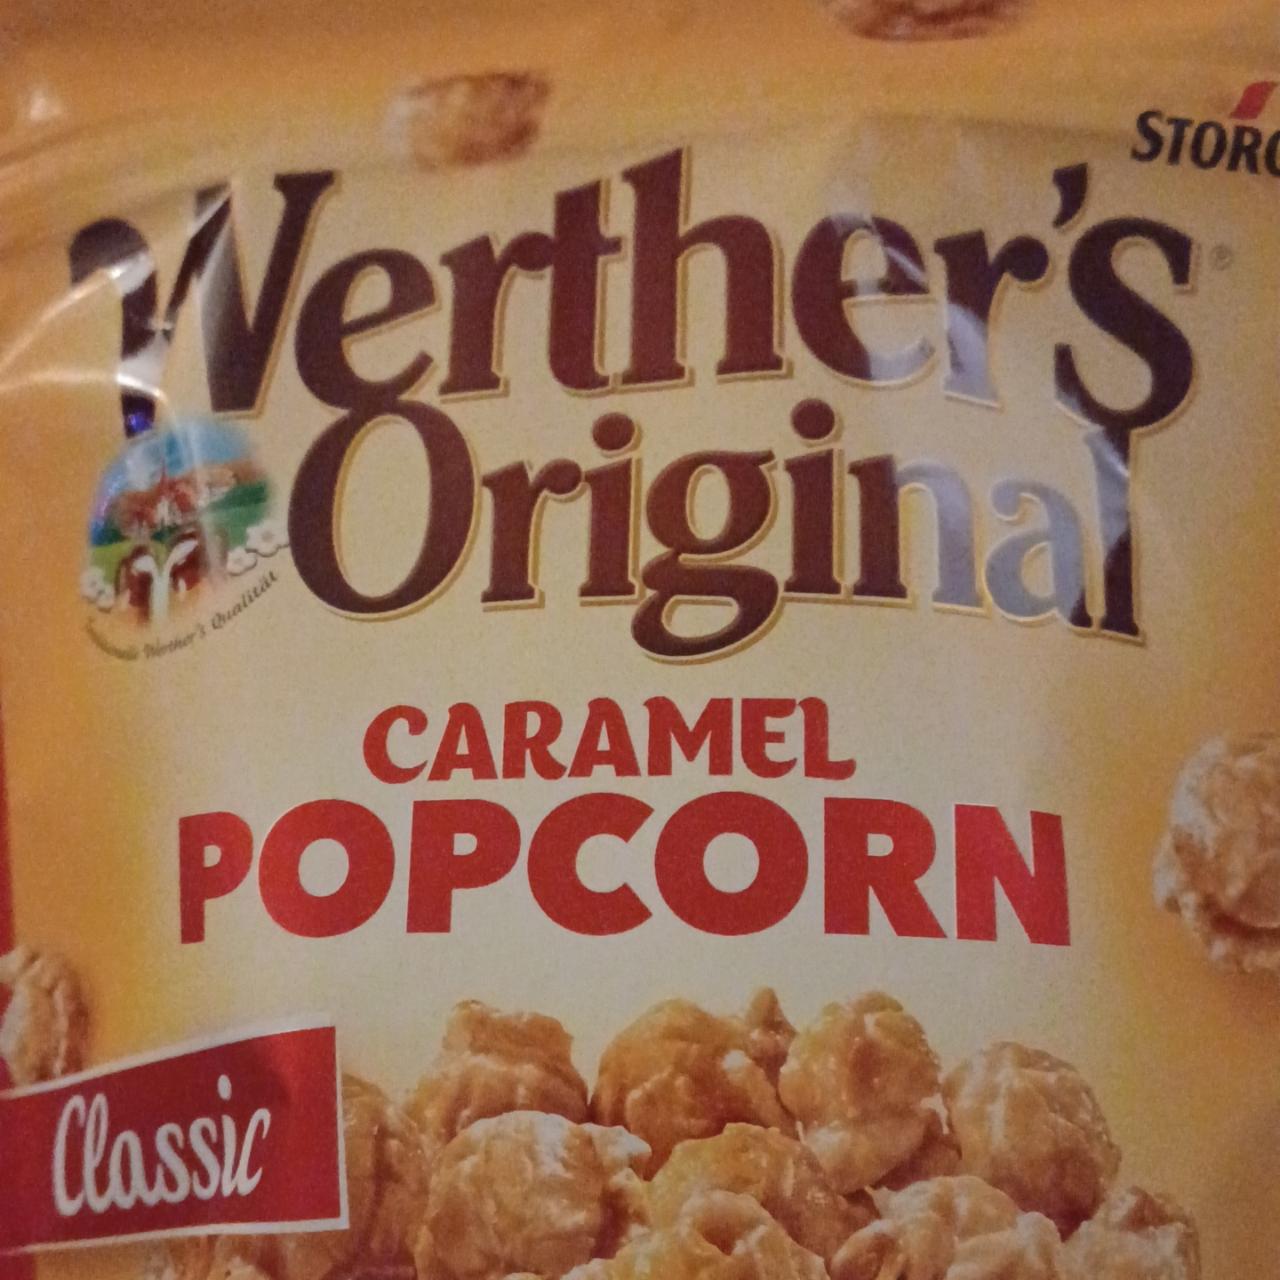 Фото - Caramel popcorn Werther's Original